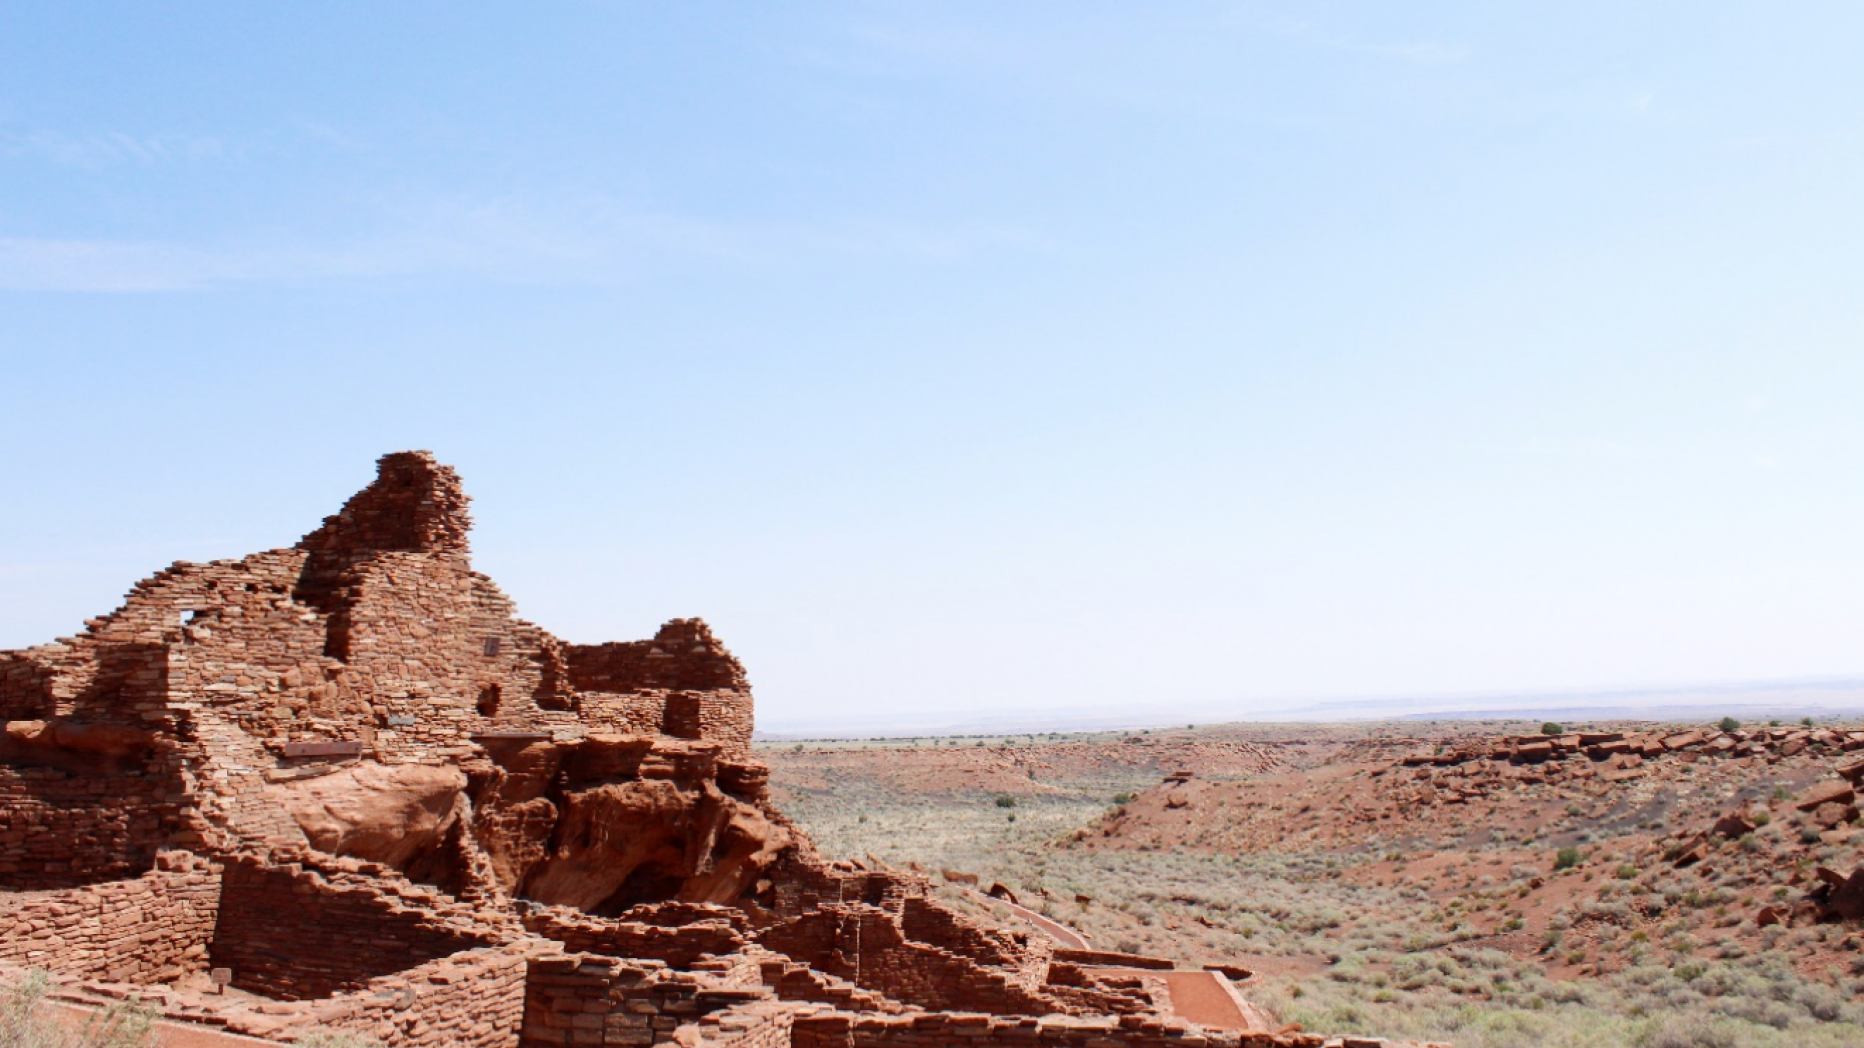 Brick-red structure/ruin overlooking desert landscape